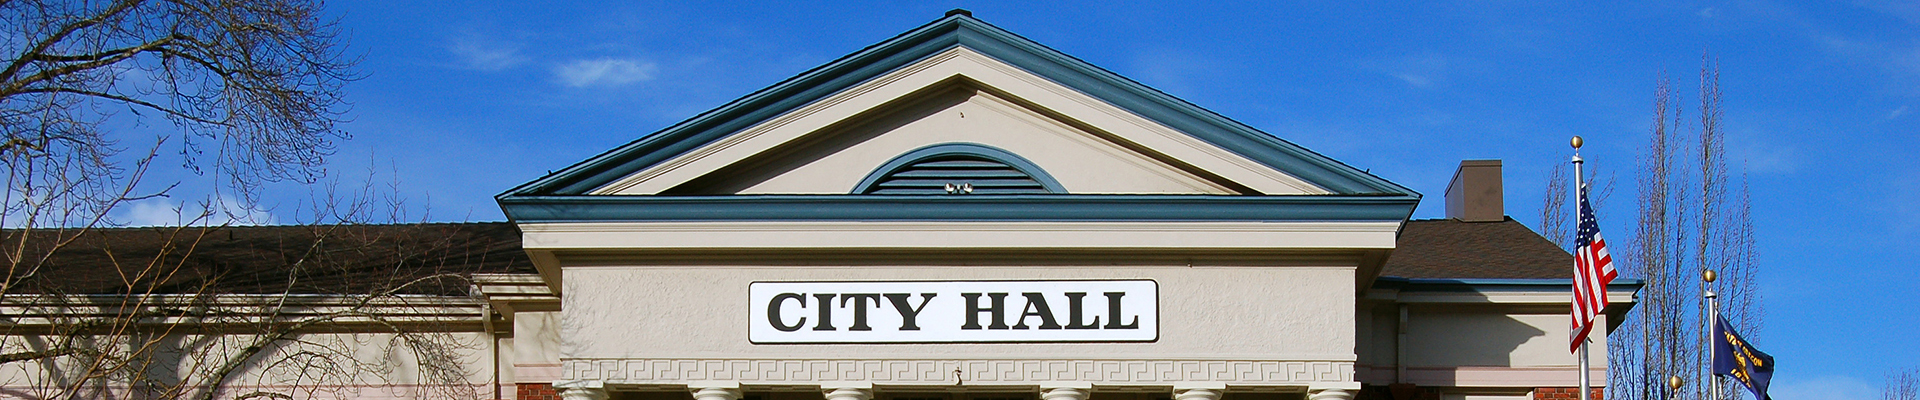 Upper portion of Corvallis, Oregon City Hall building